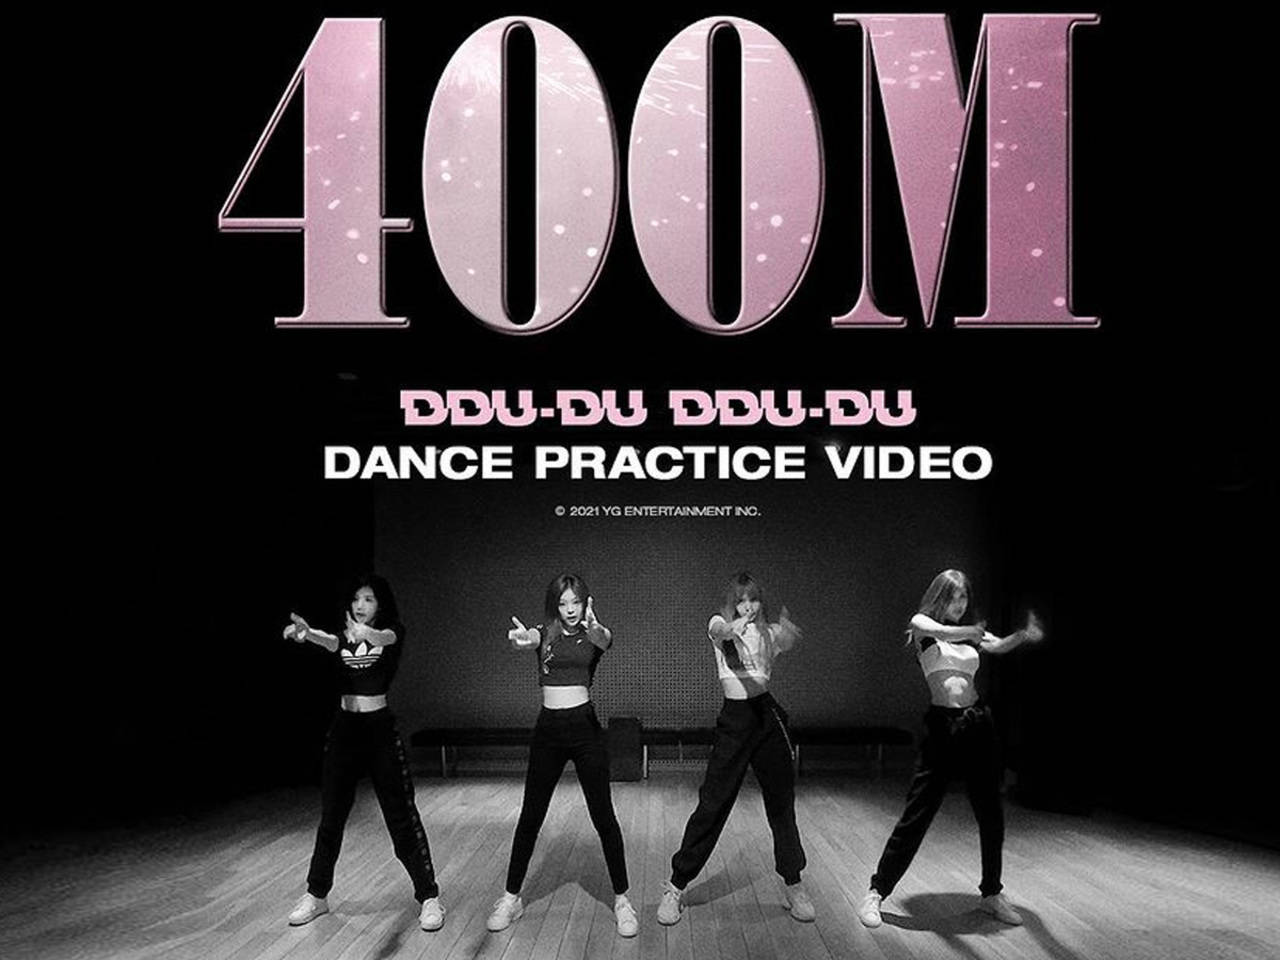 As BLACKPINK's 'DDU-DU DDU-DU' dance practice video crosses 400 million  mark, girls announce new video game collaboration | K-pop Movie News -  Times of India